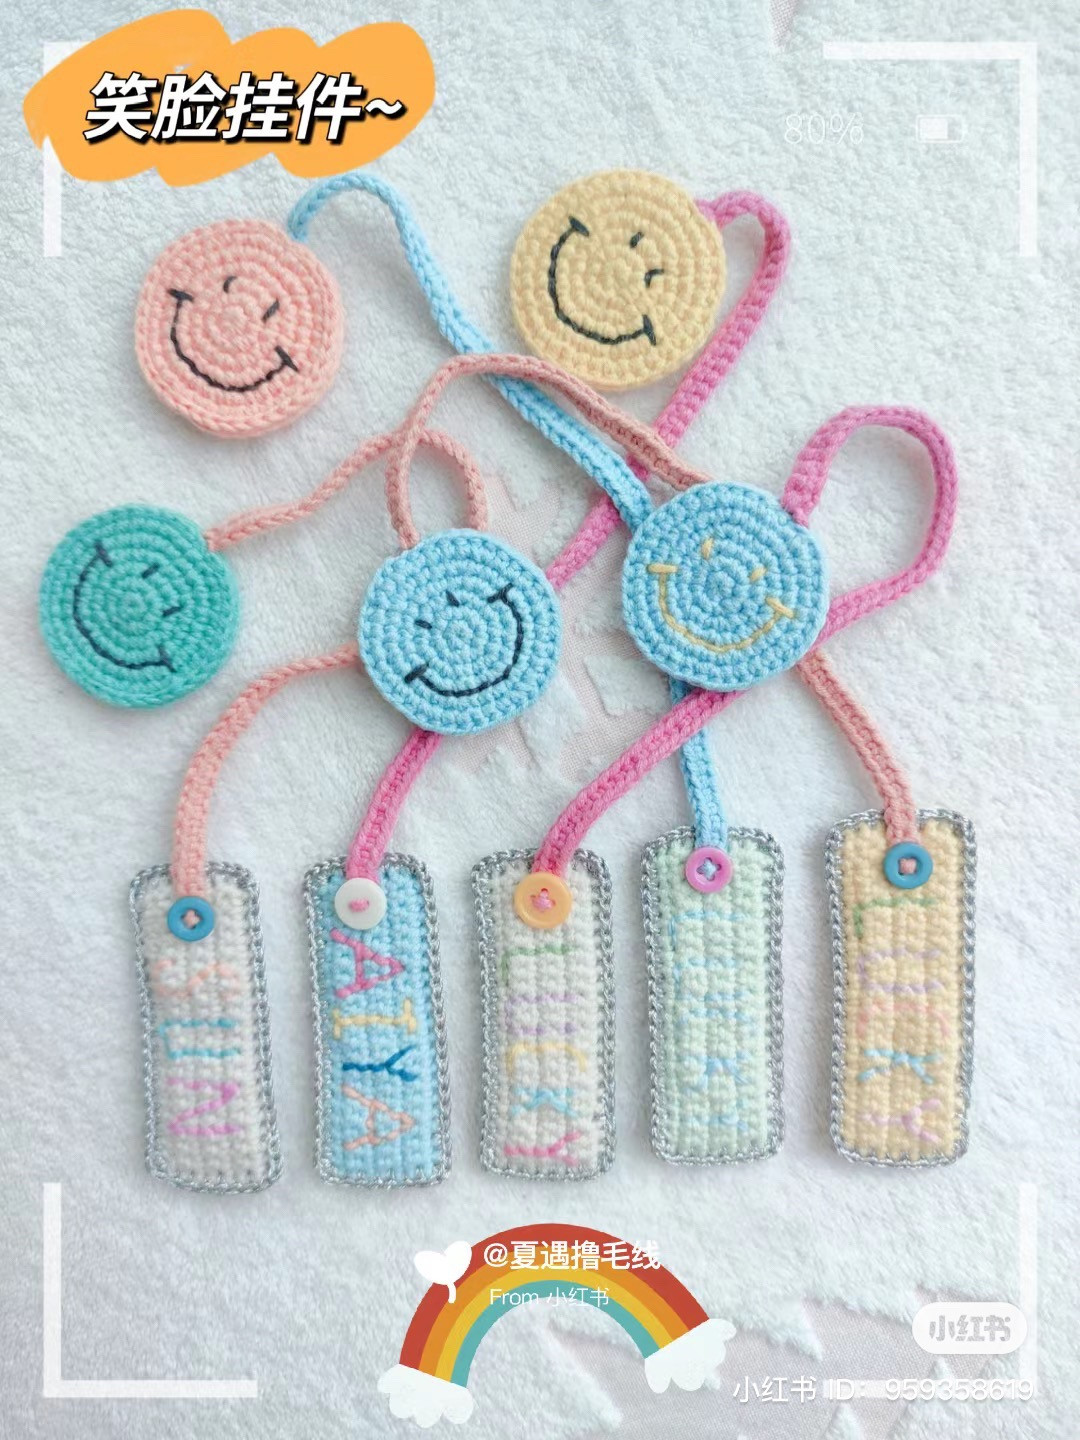 Crochet pattern Smiley face illustration
: